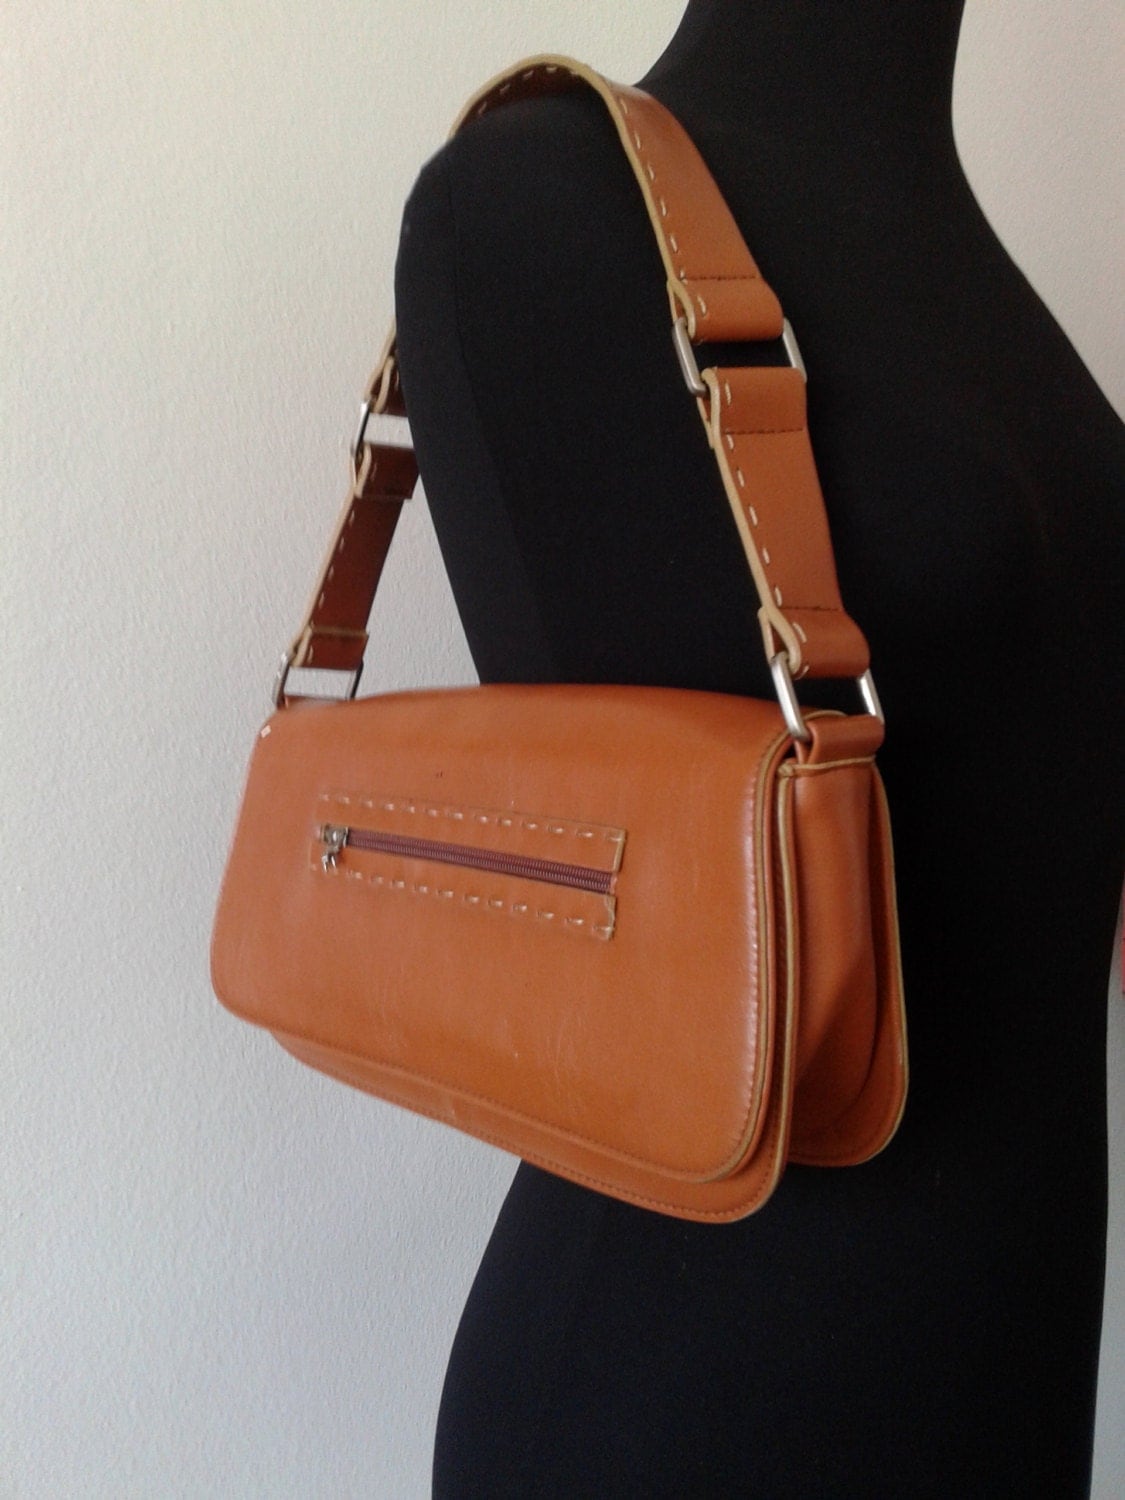 Vintage leather handbag Made in Spain by MATTIES